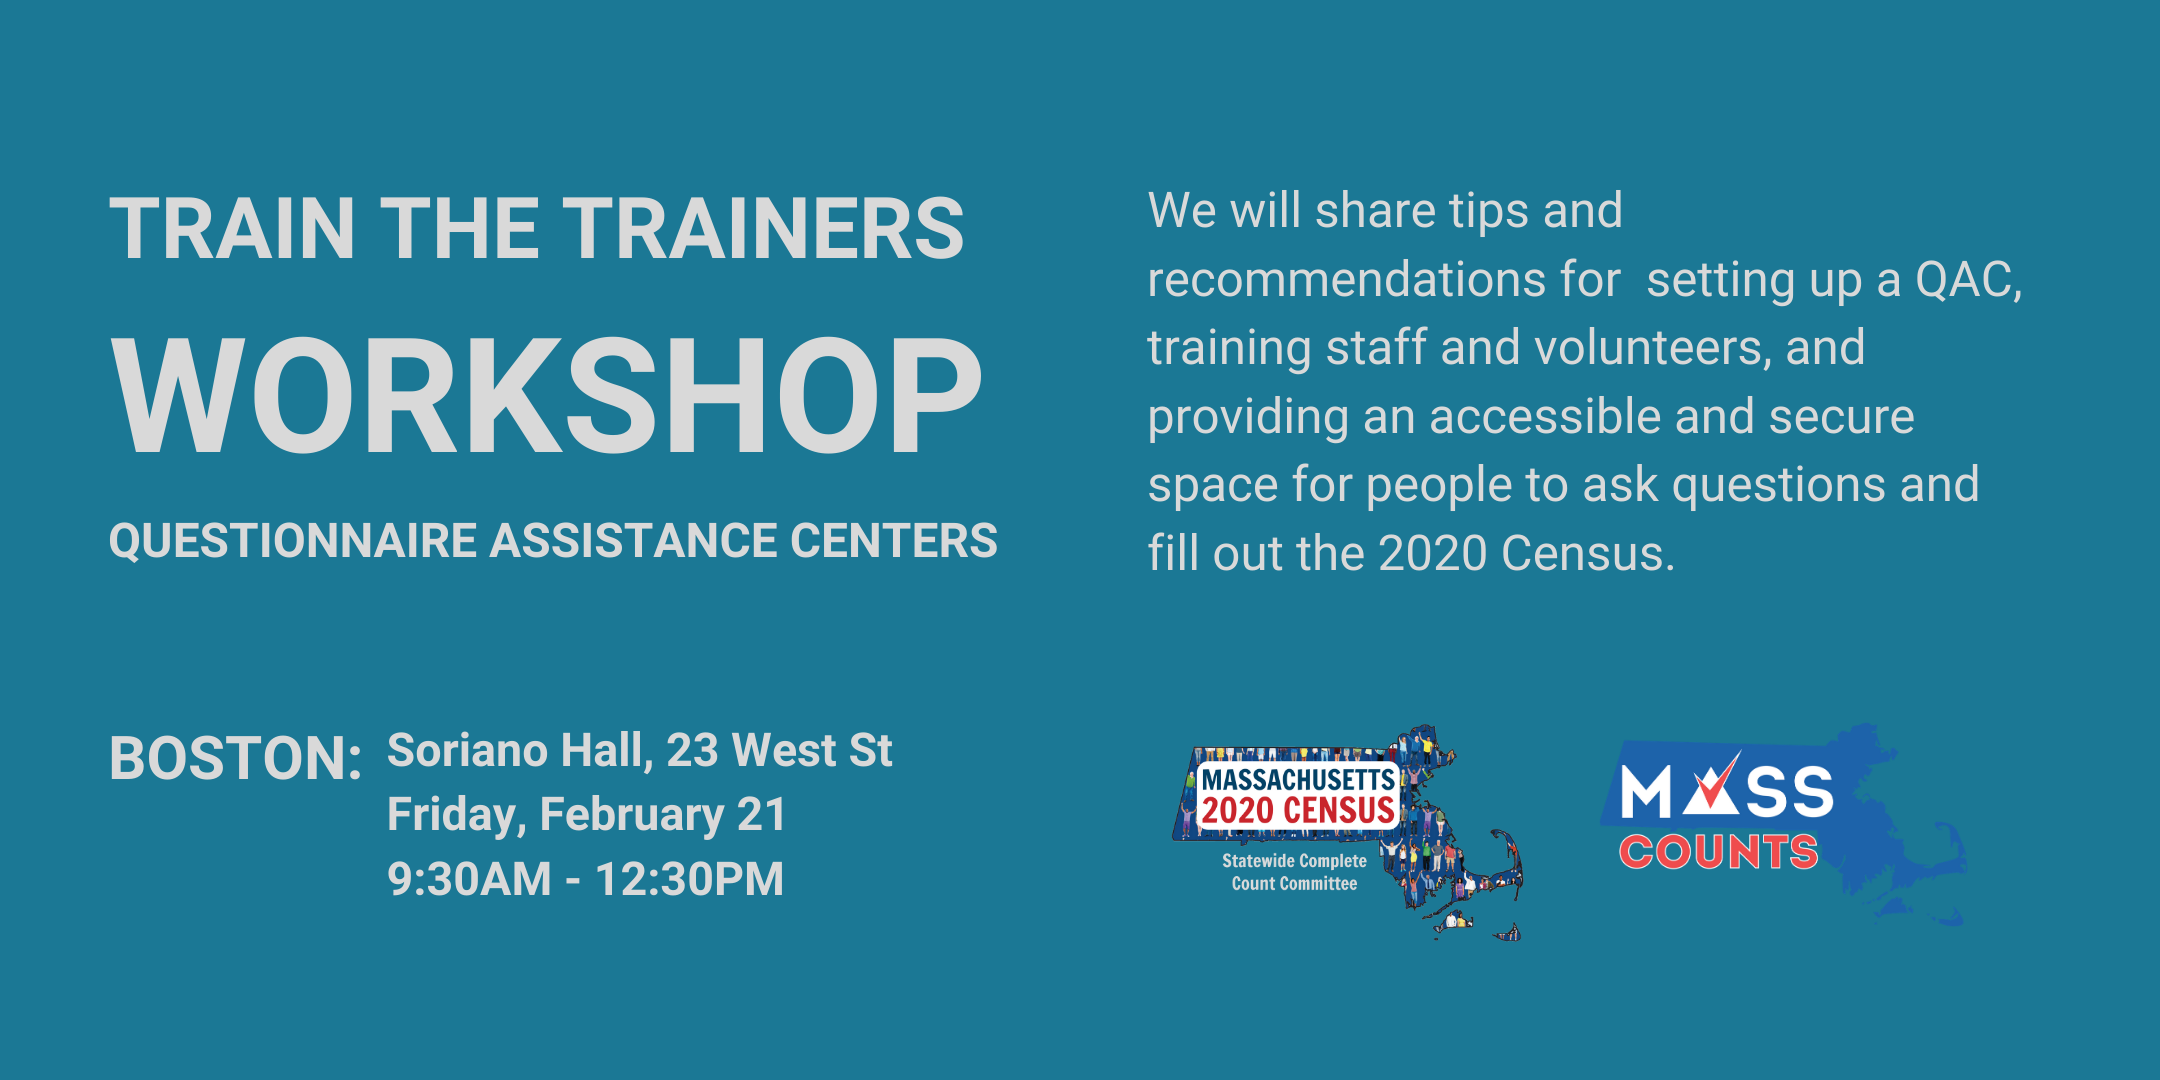 Train the Trainers Workshop for Questionnaire Assistance Centers